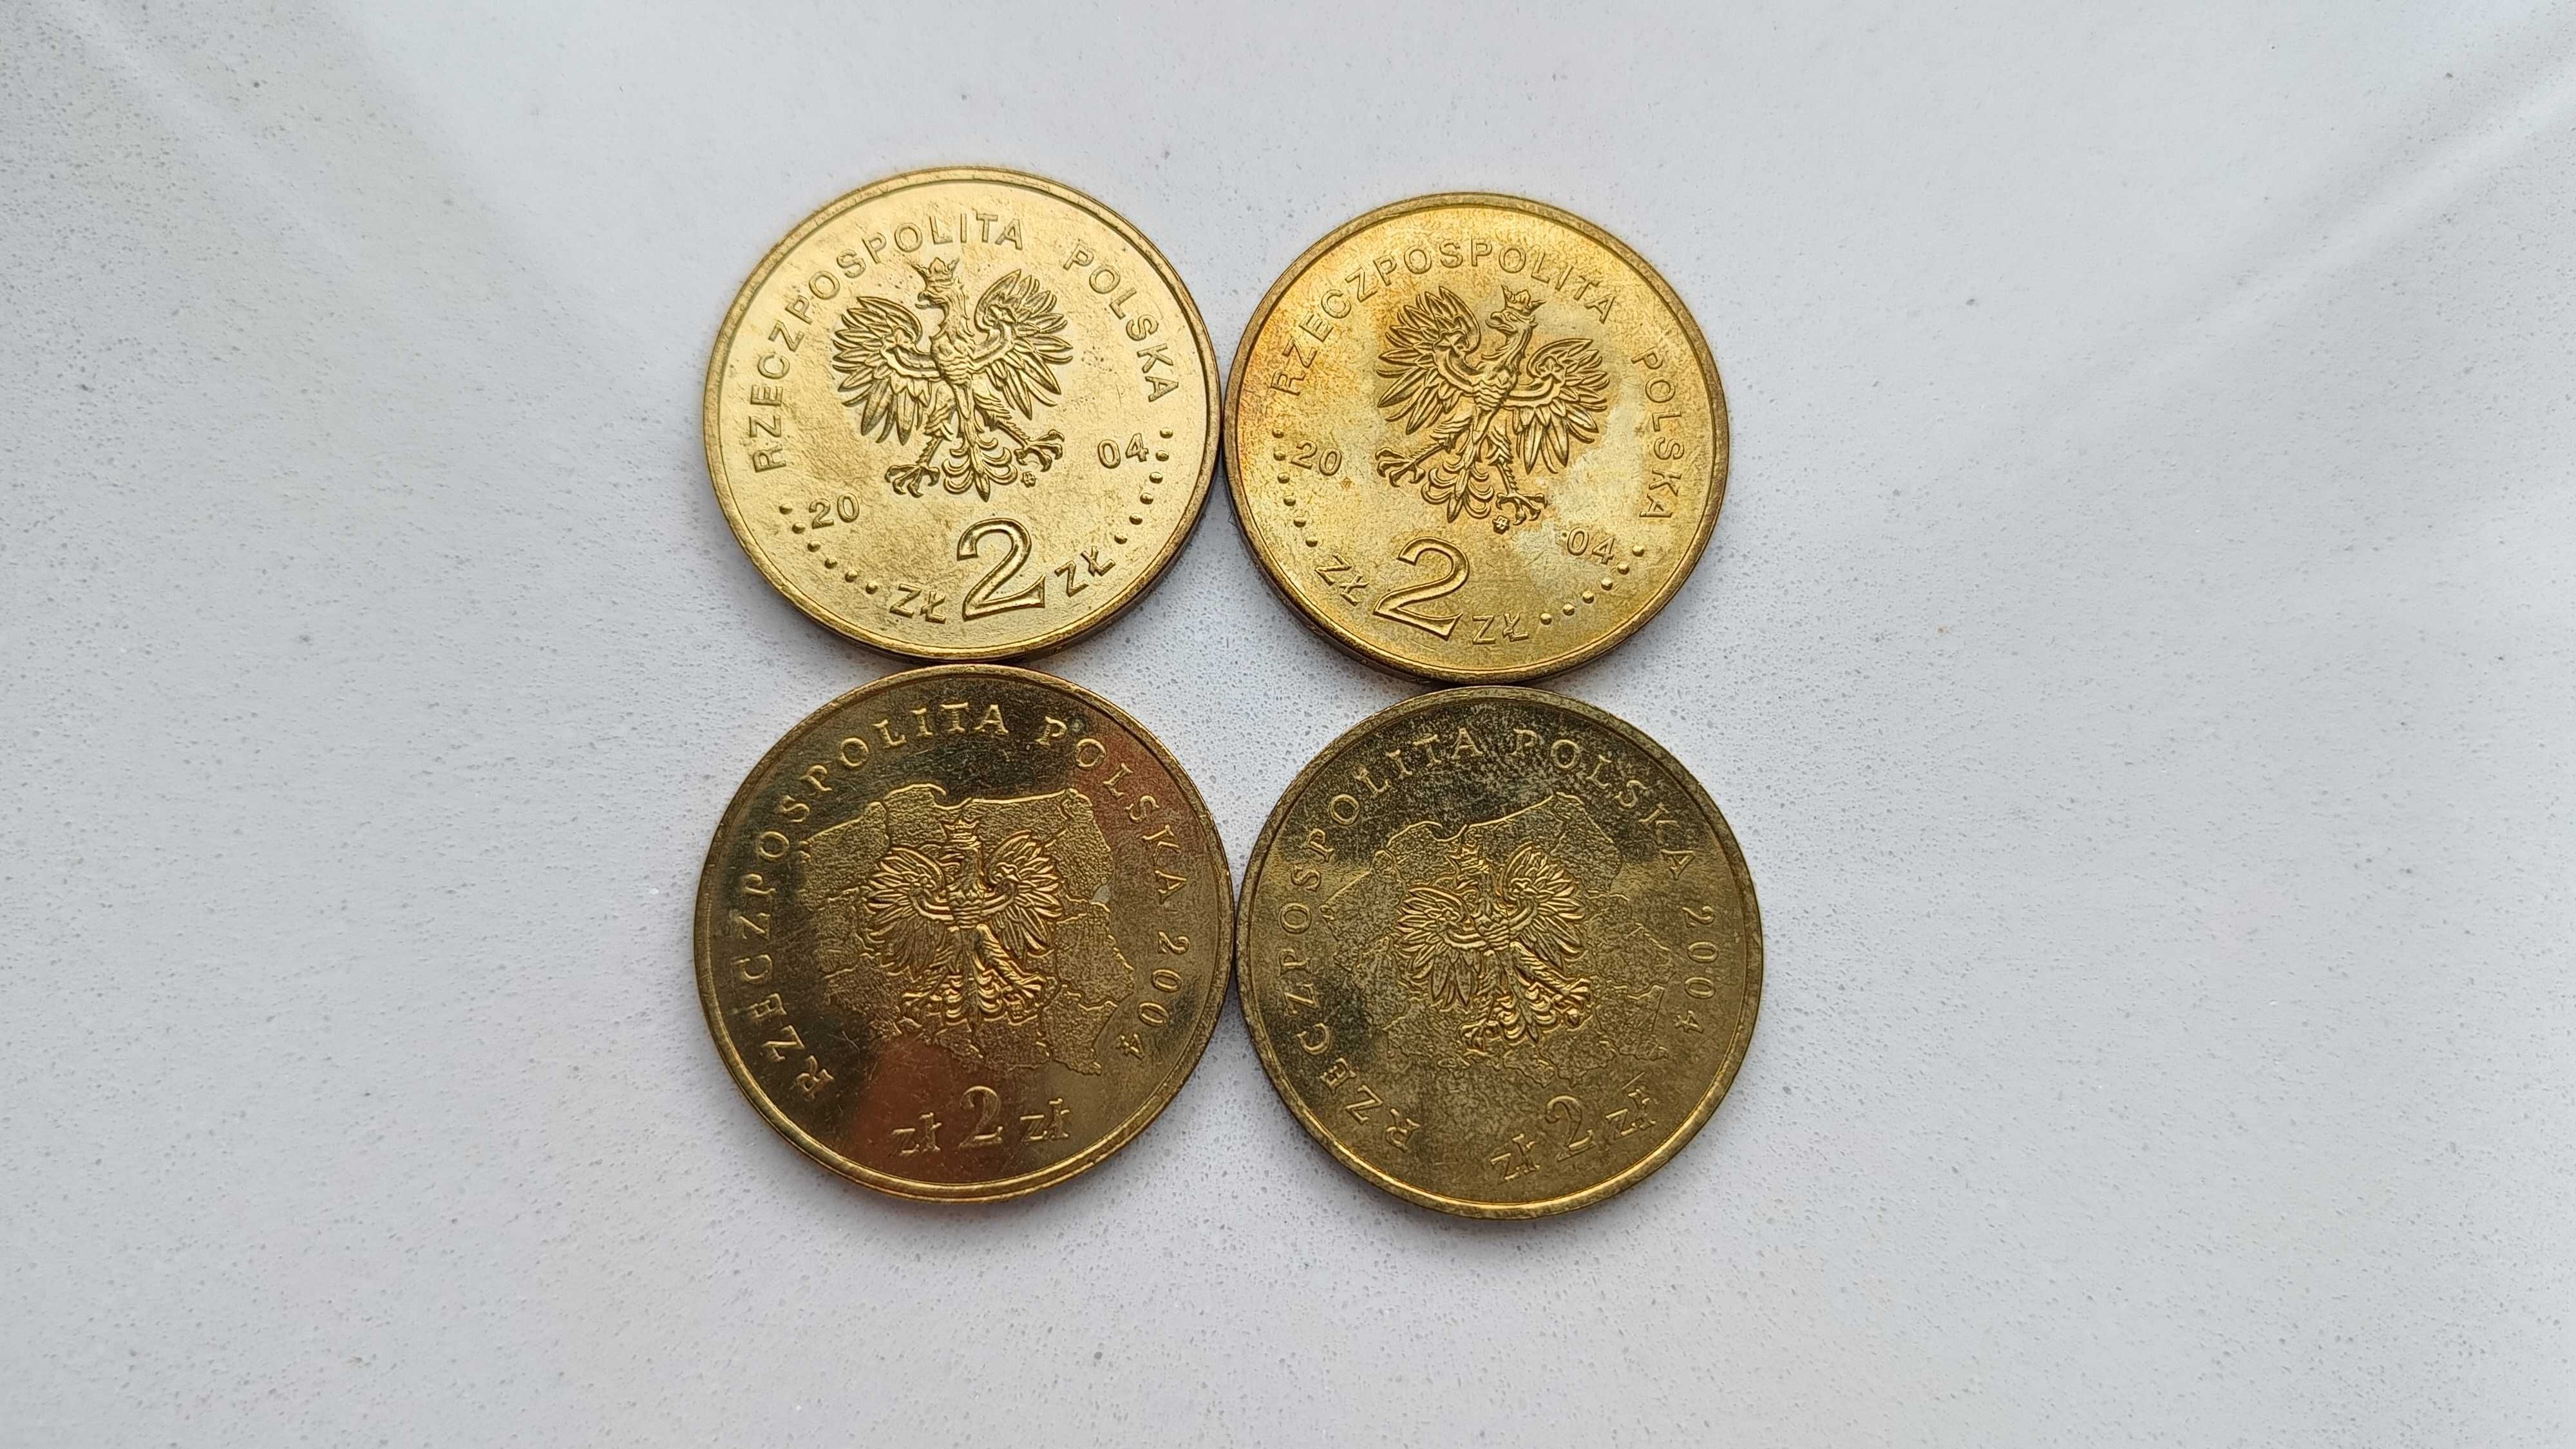 4 Monety 2 złote - 2004 r.